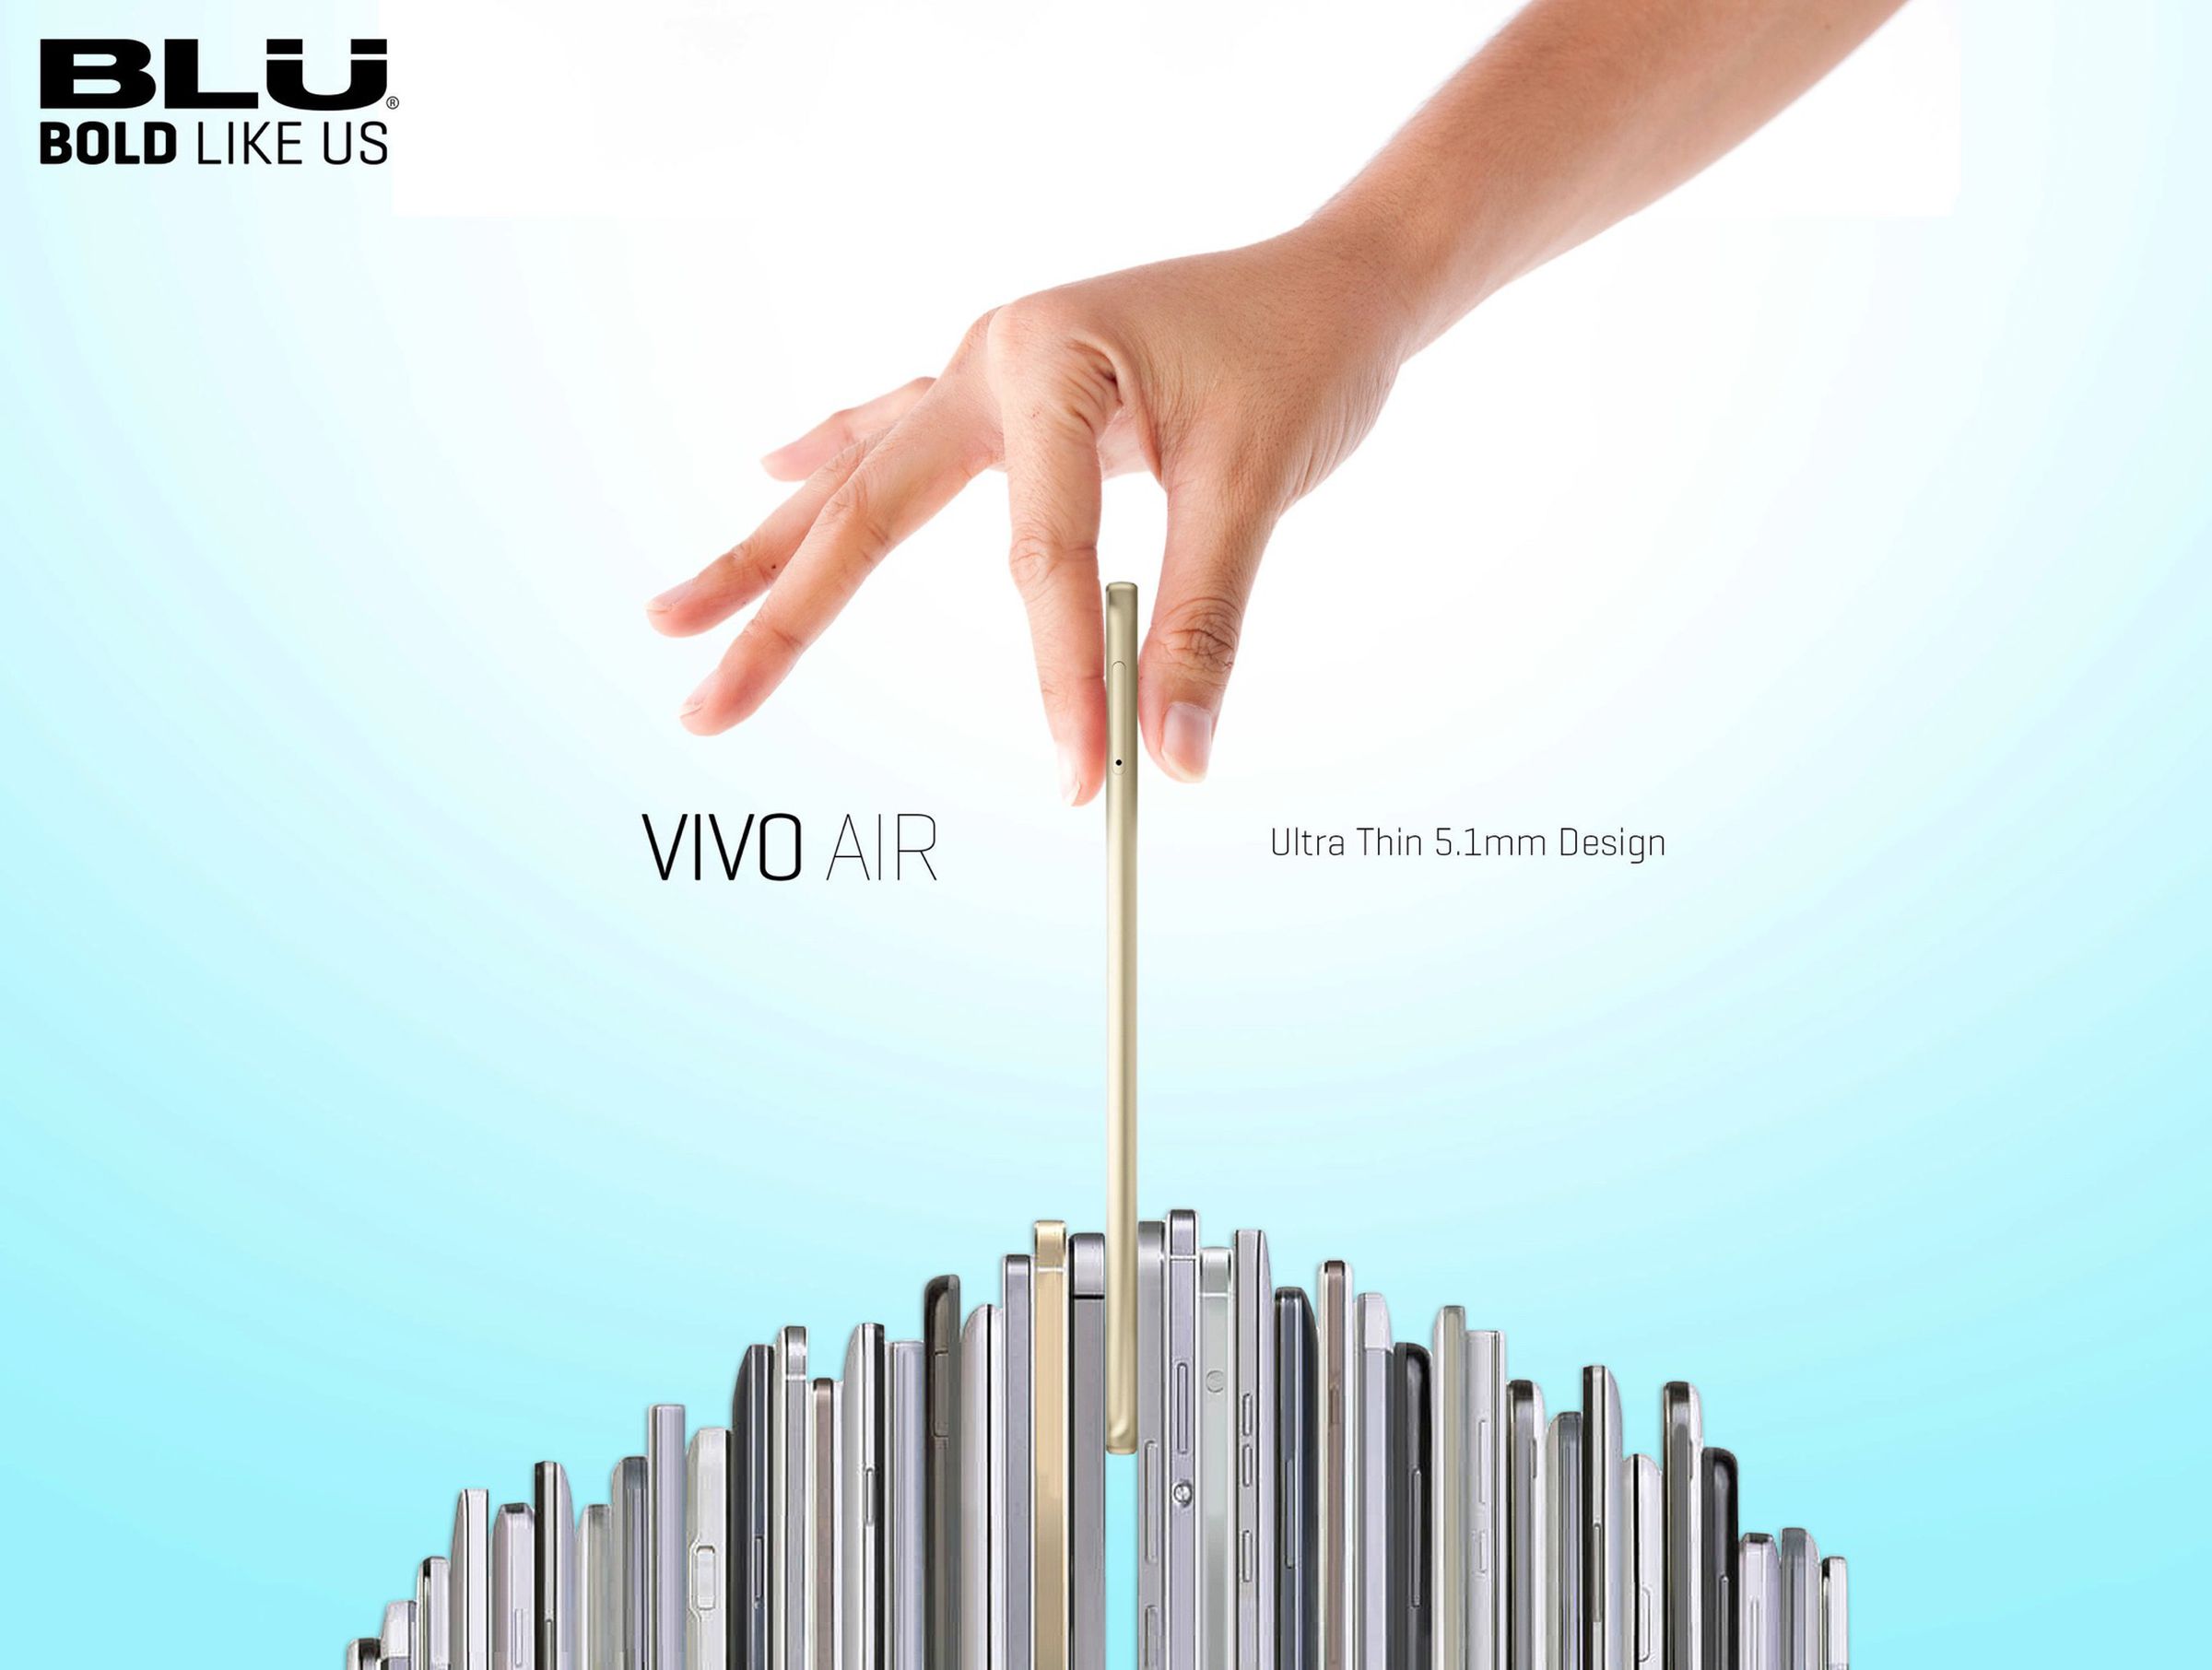 Blu Vivo Air pictures